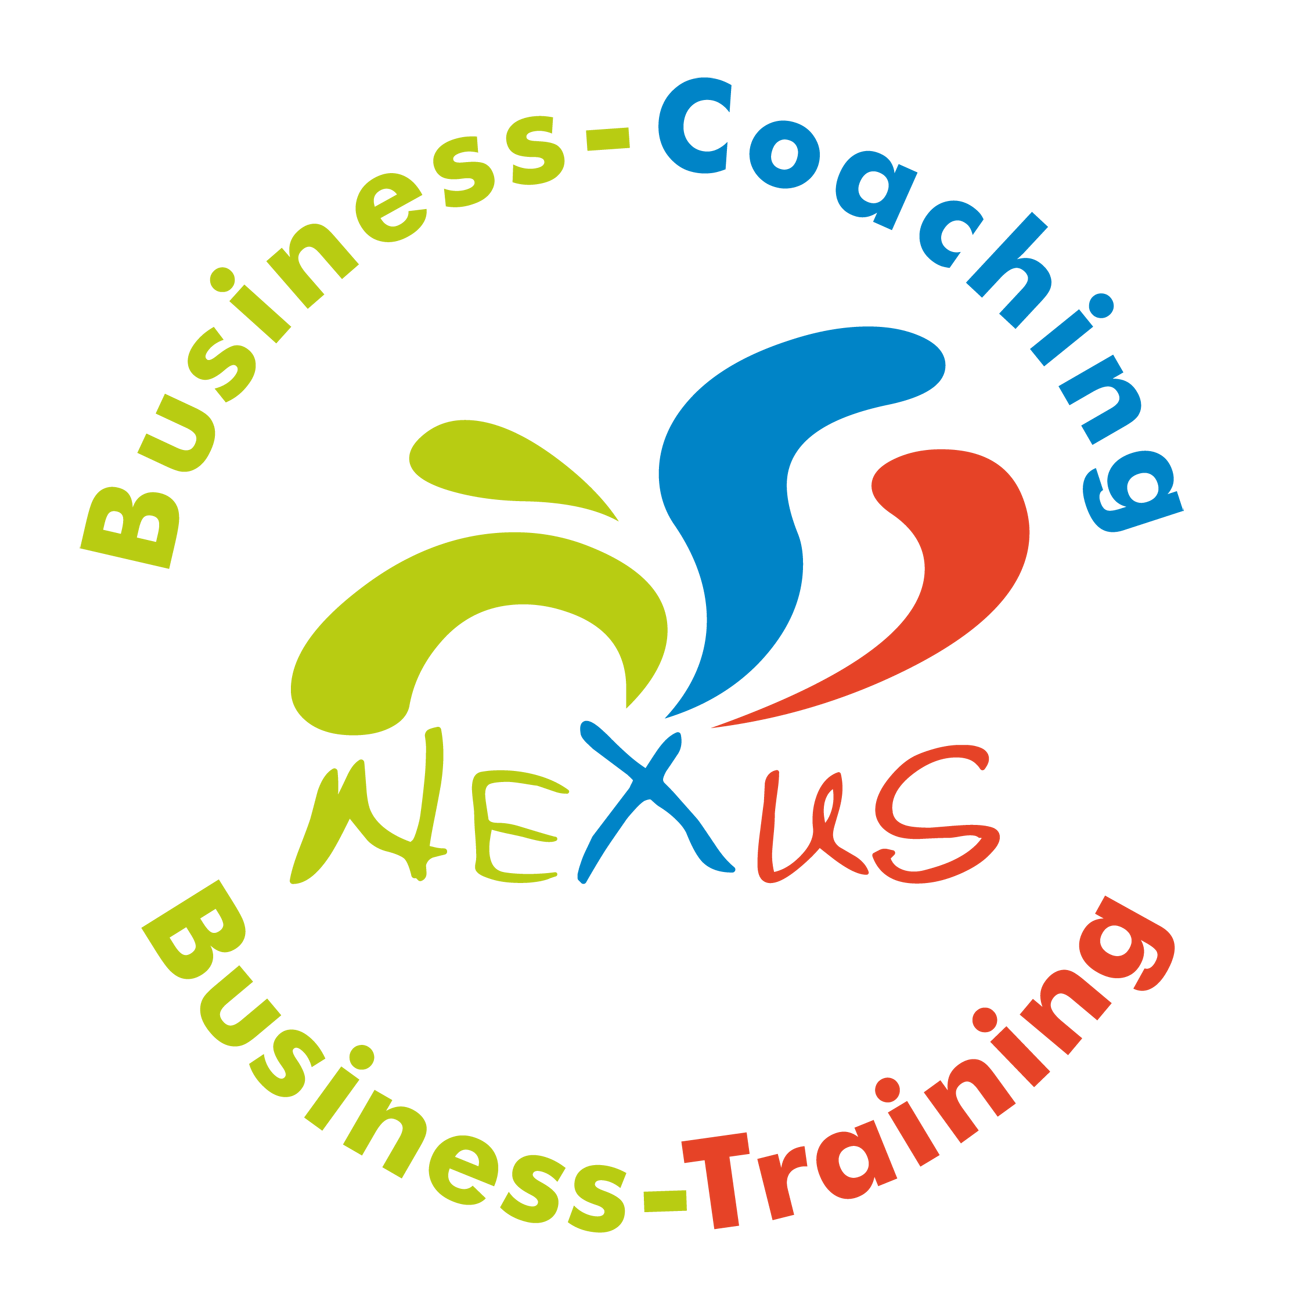 Business-Coaching Basel, Business-Einzelcoaching, Business-Training, Führungskräfte-Coaching Basel, Führungskräfte-Training, Kommunikationstraining, Persönlichkeitstraining